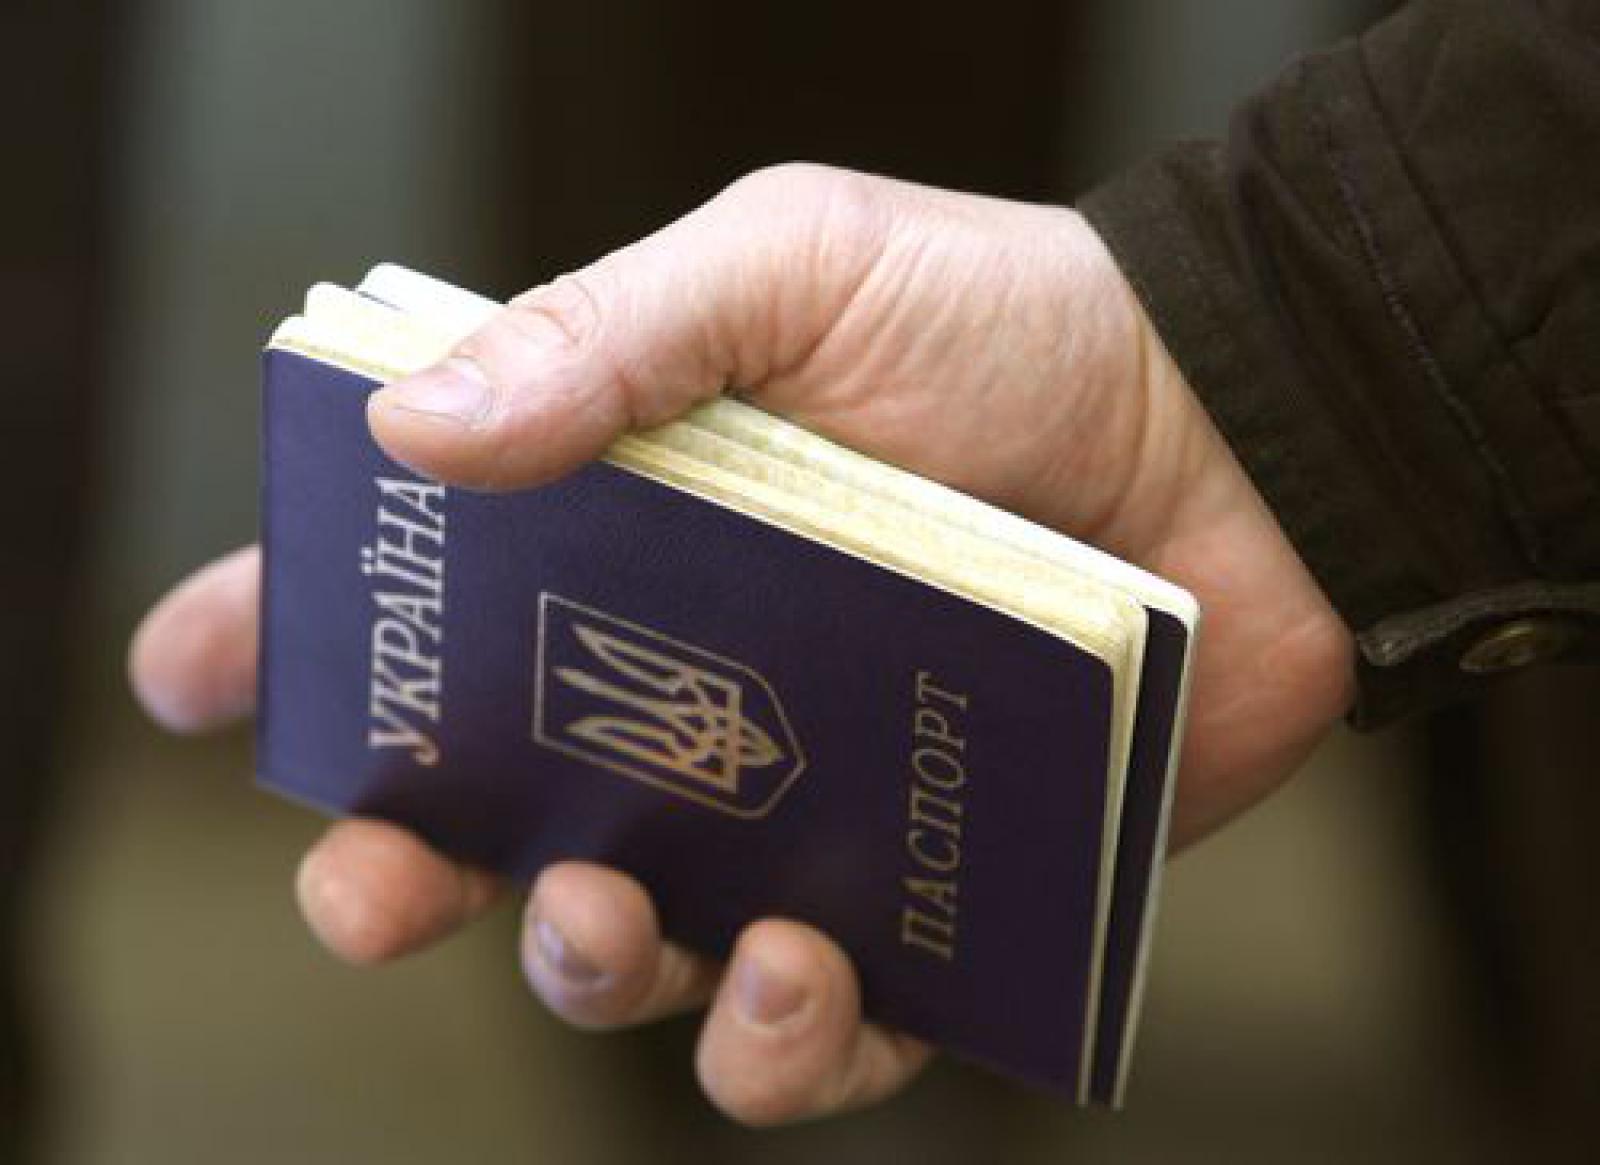 Украинский загранпаспорт в руке